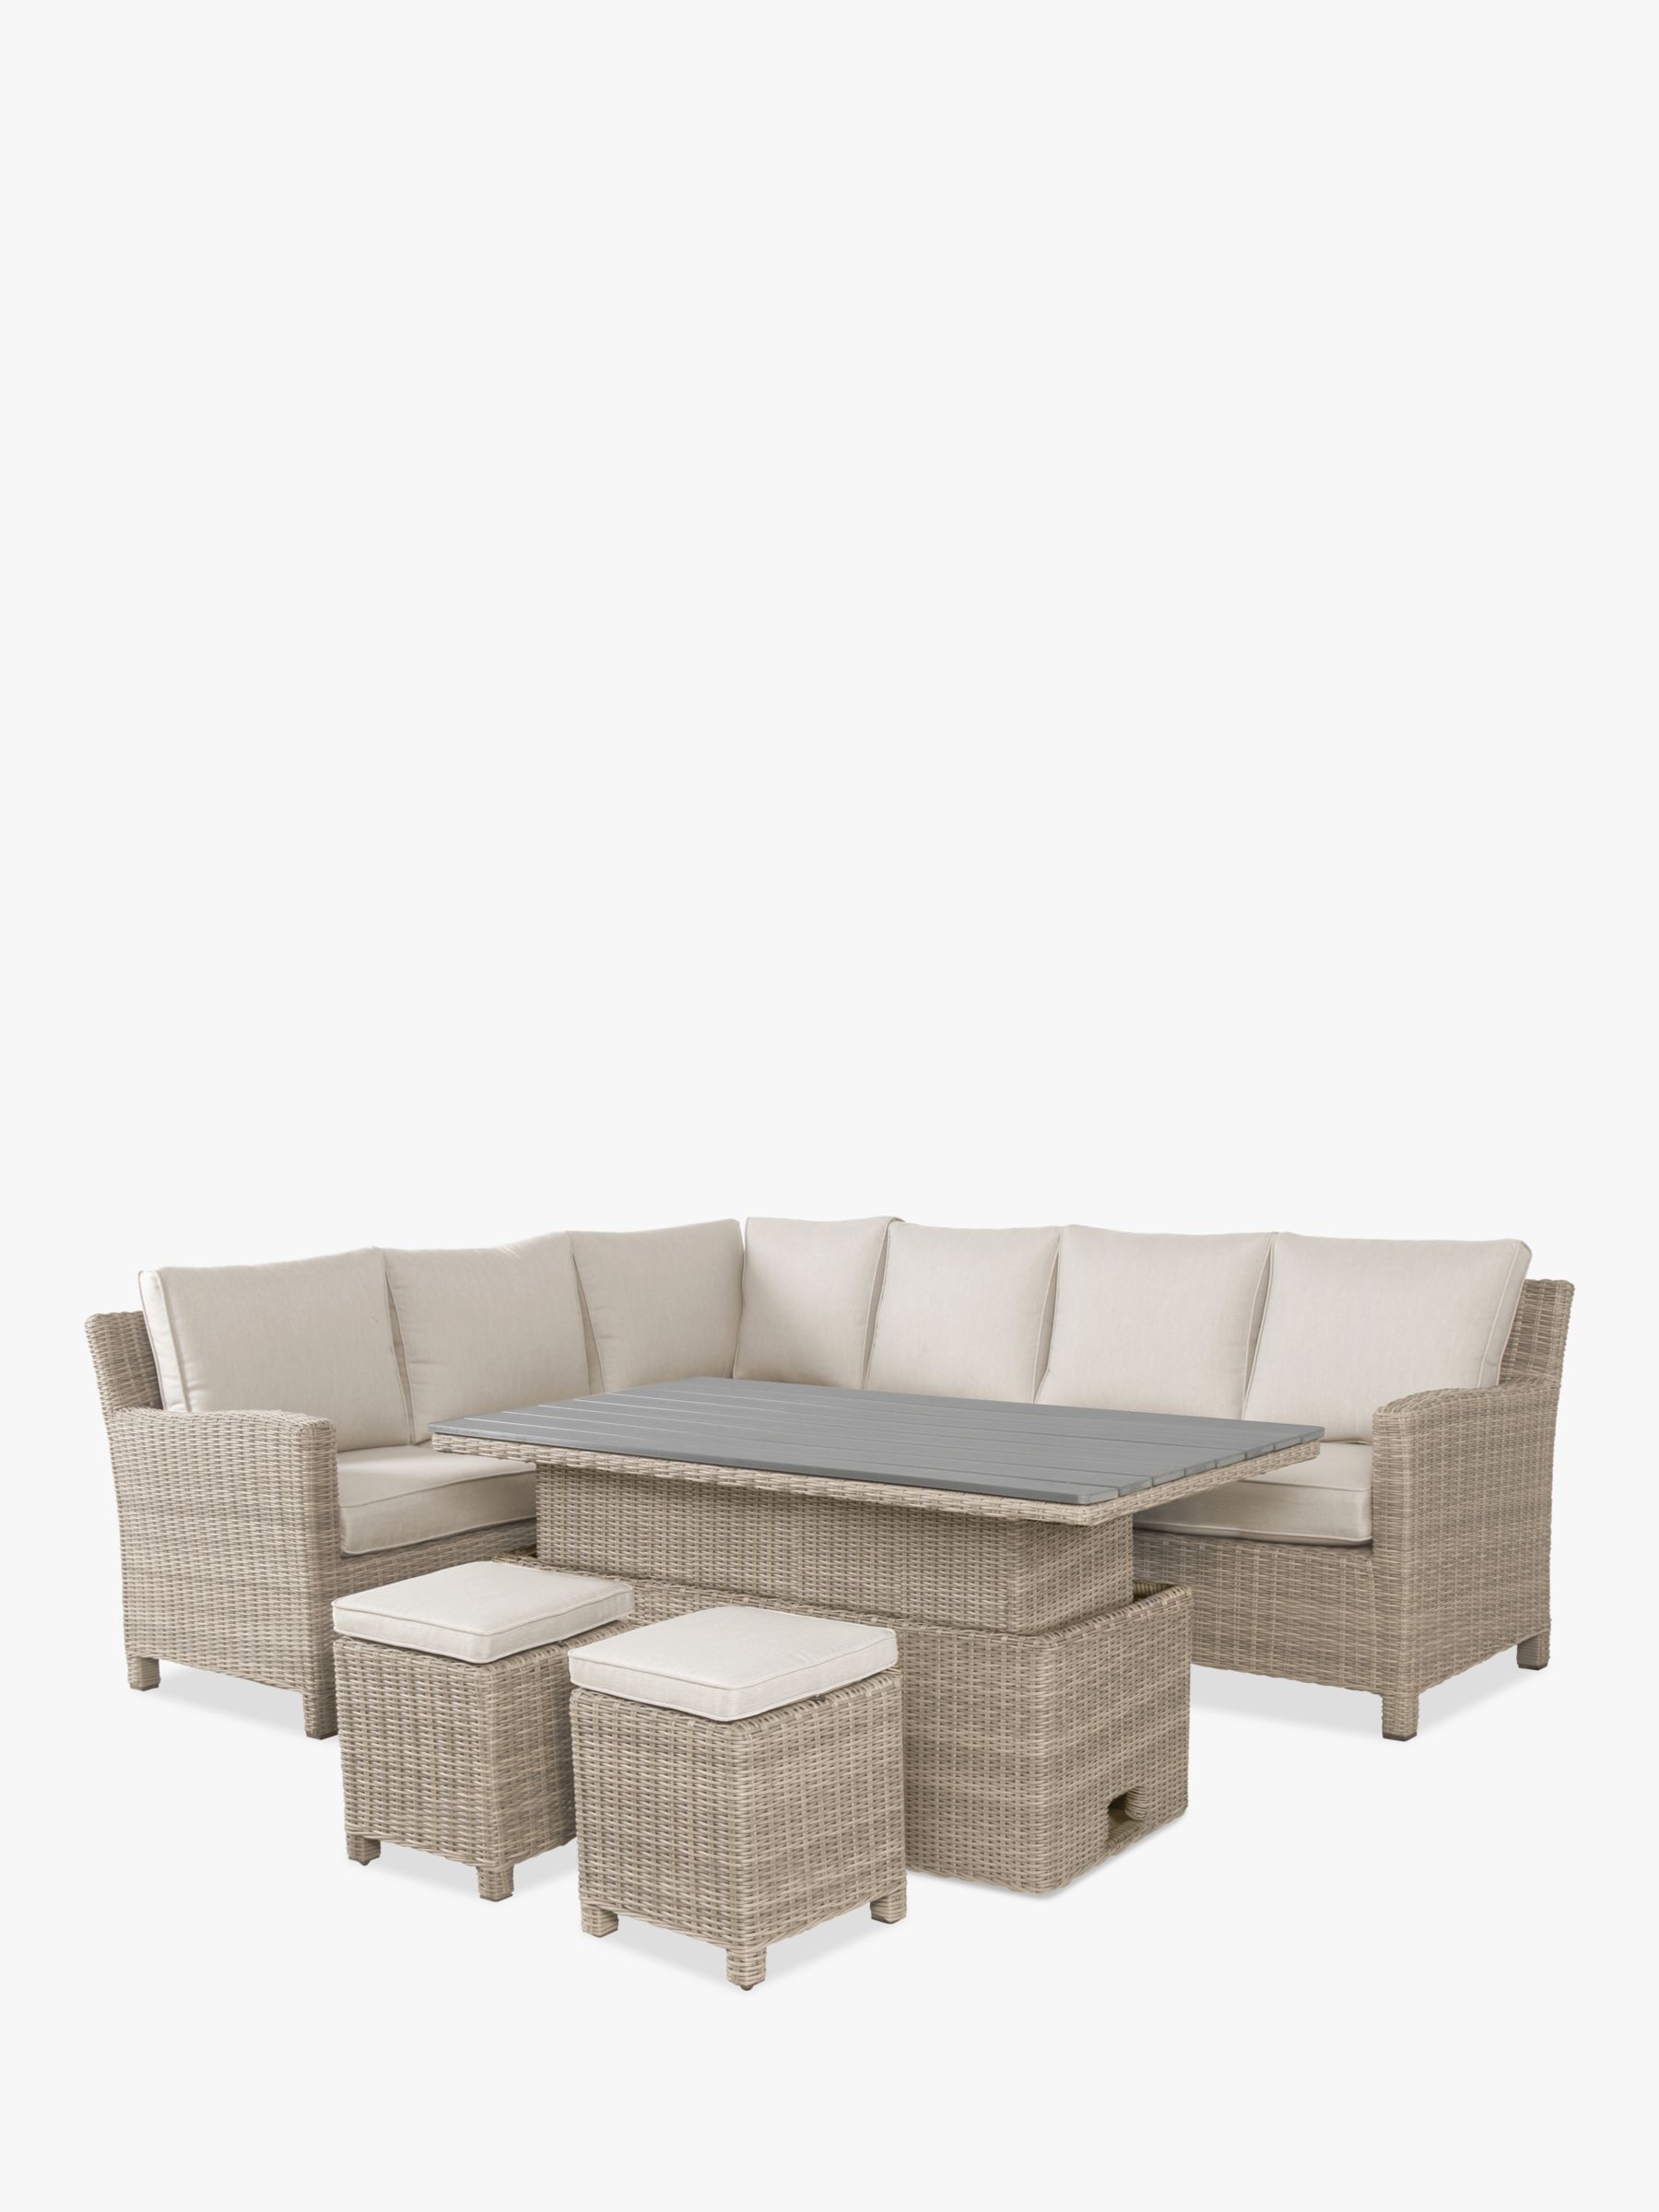 Photo of Kettler palma 8-seater corner garden sofa adjustable table & stools set